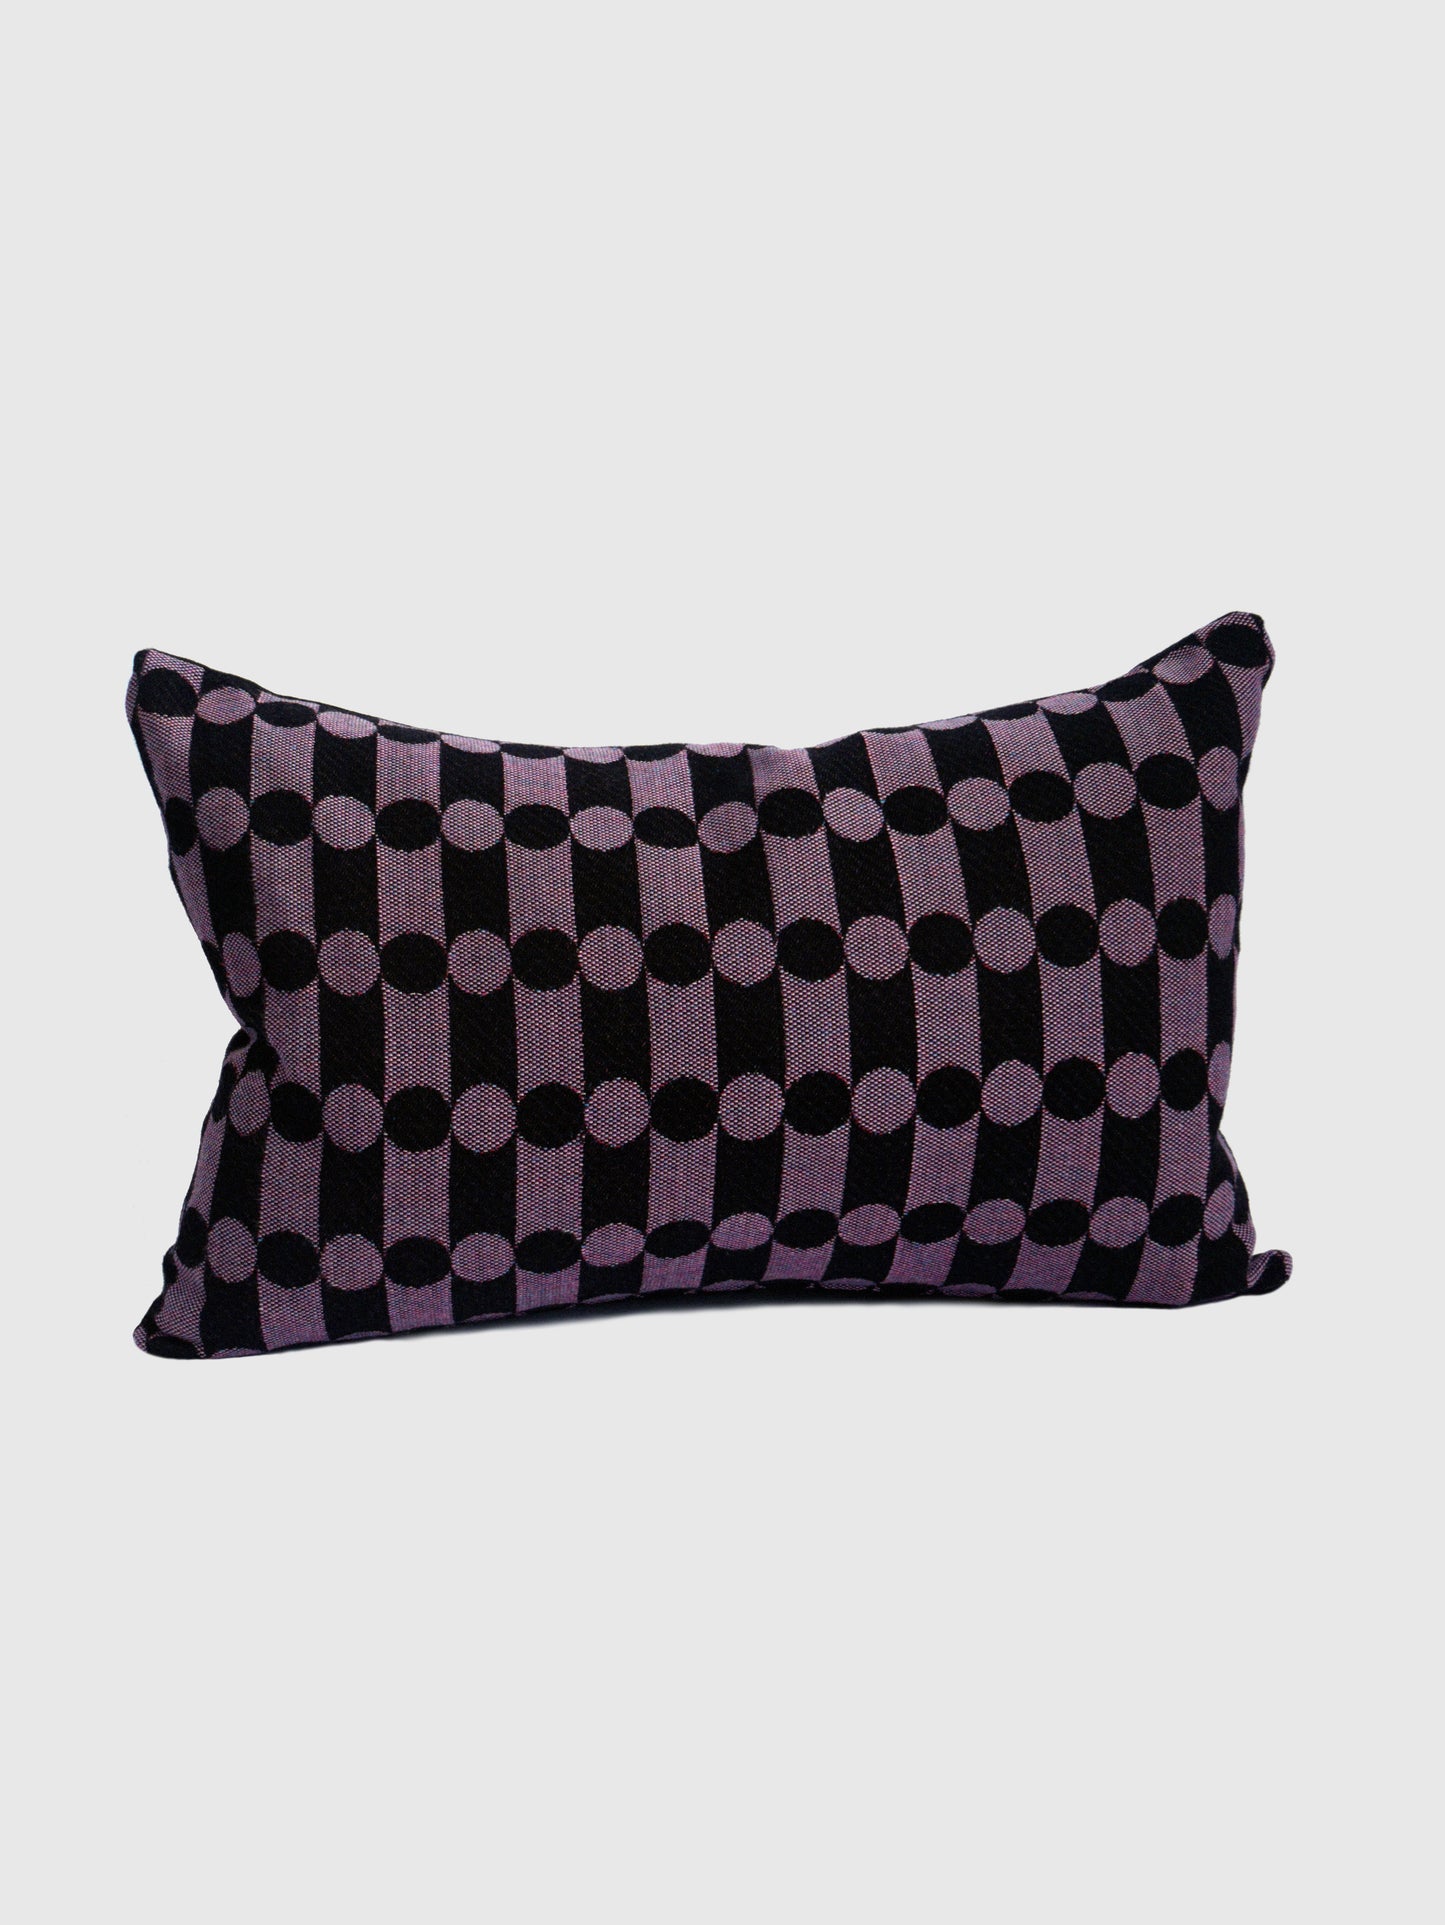 12" lumbar pillow by emma harling